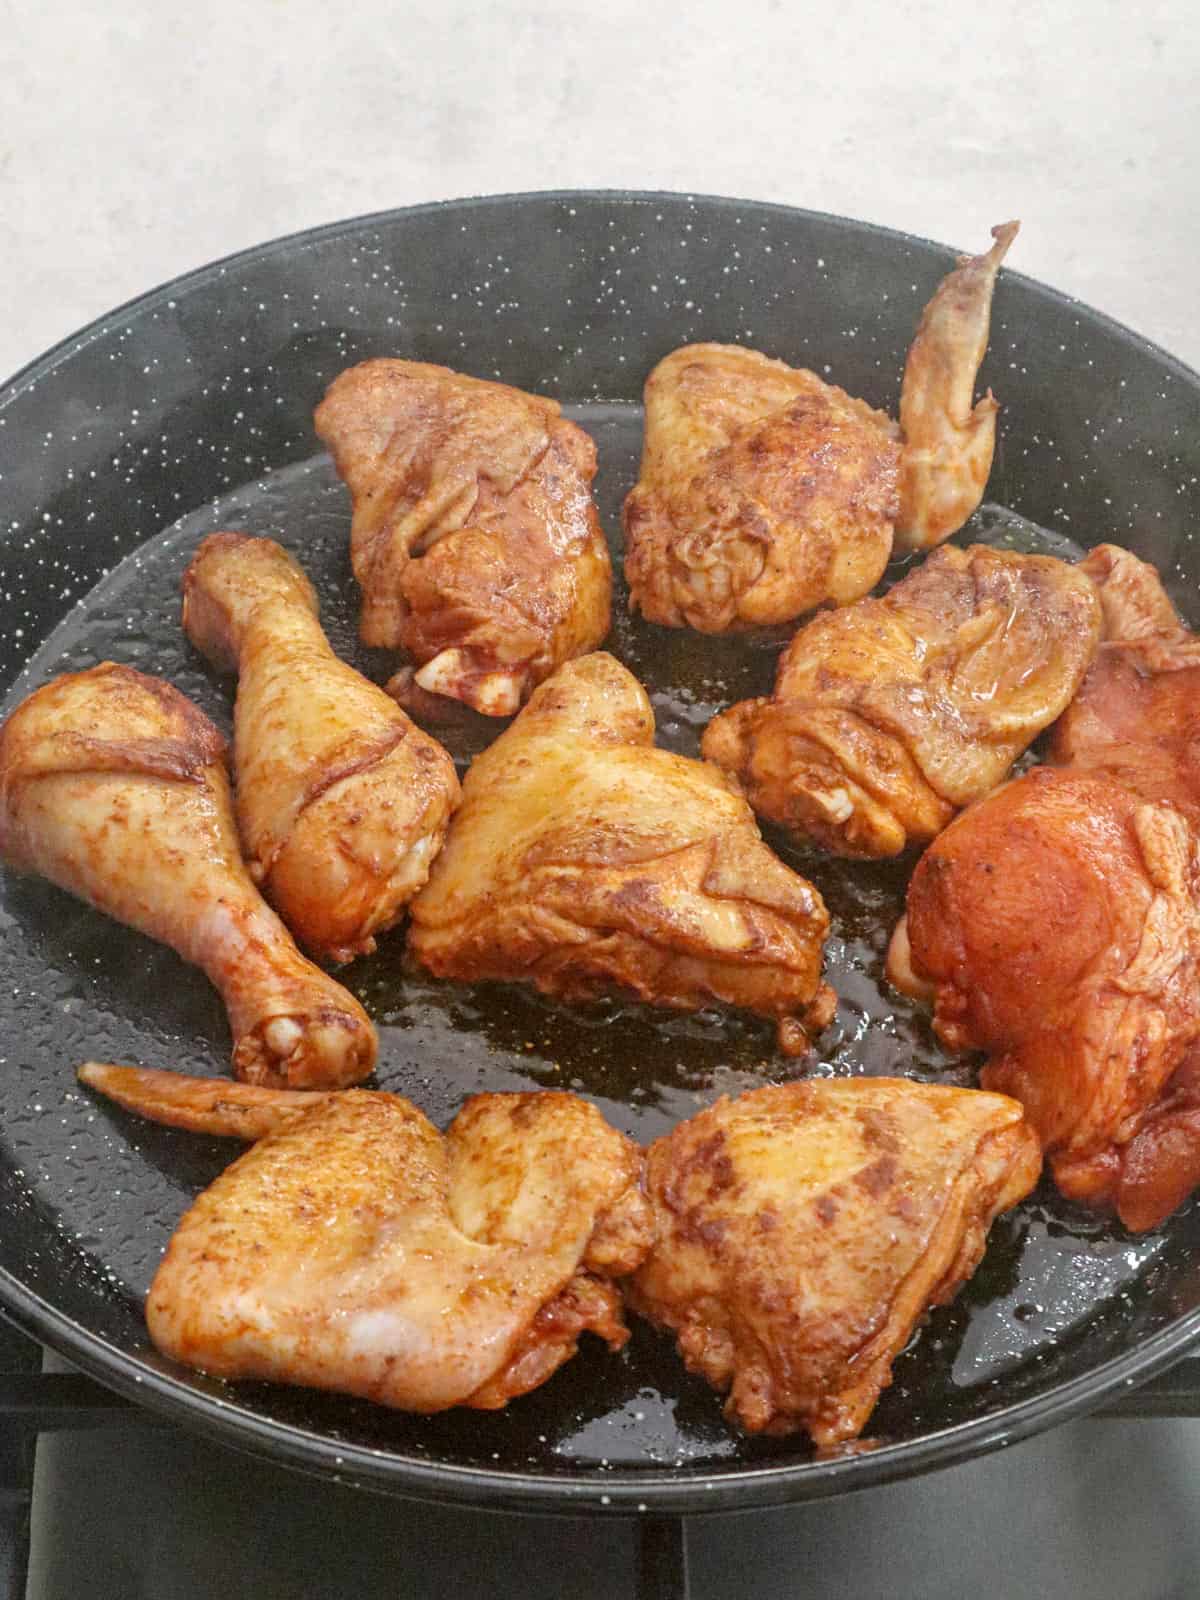 browning seasoned chicken in a paellera